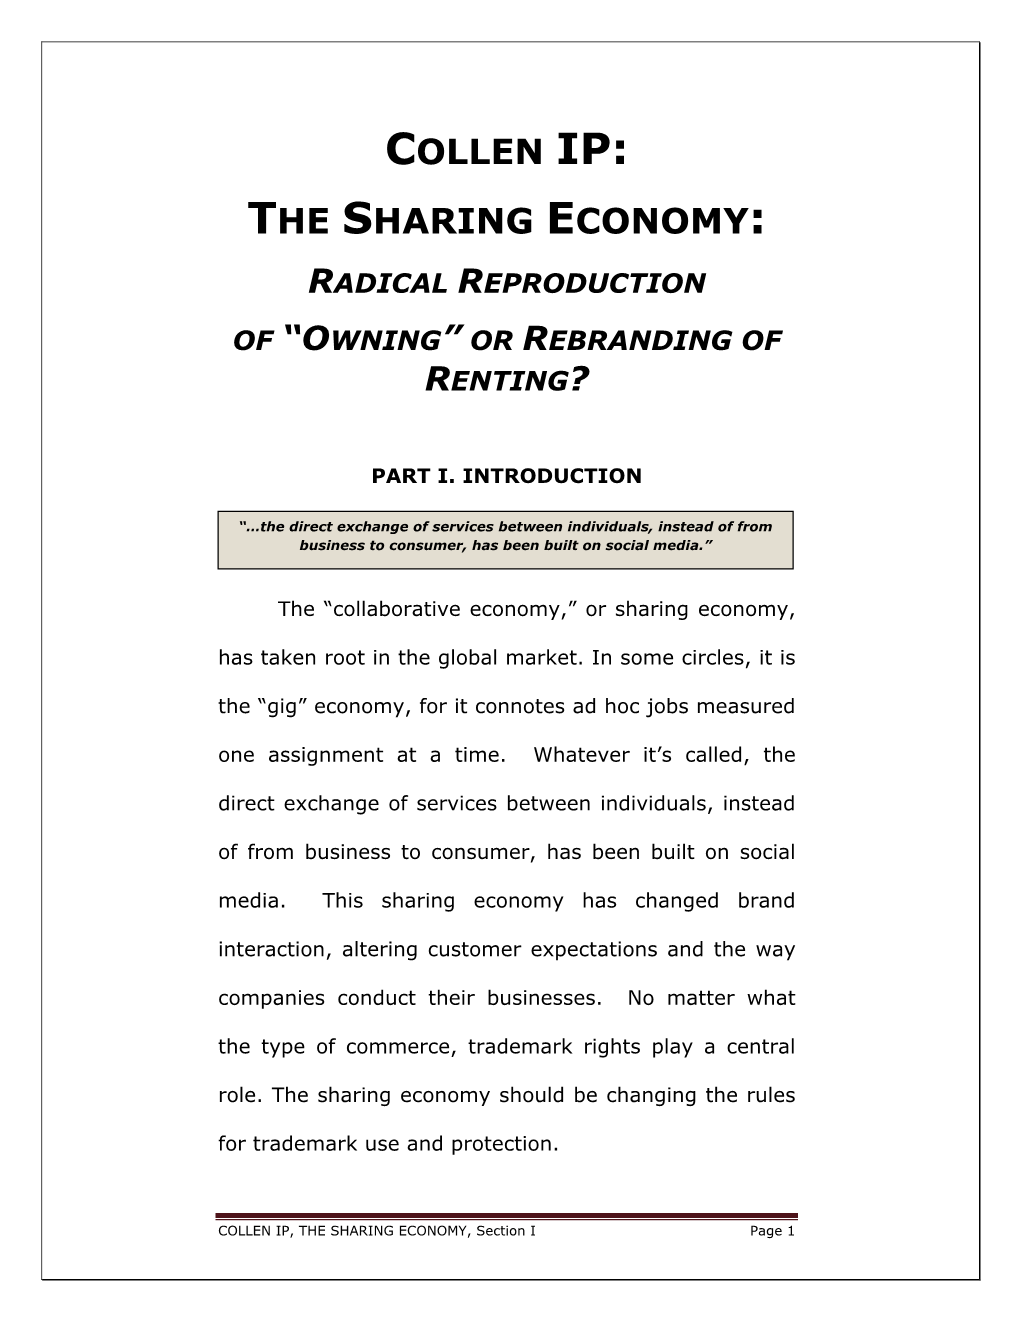 Collen IP the Sharing Economy